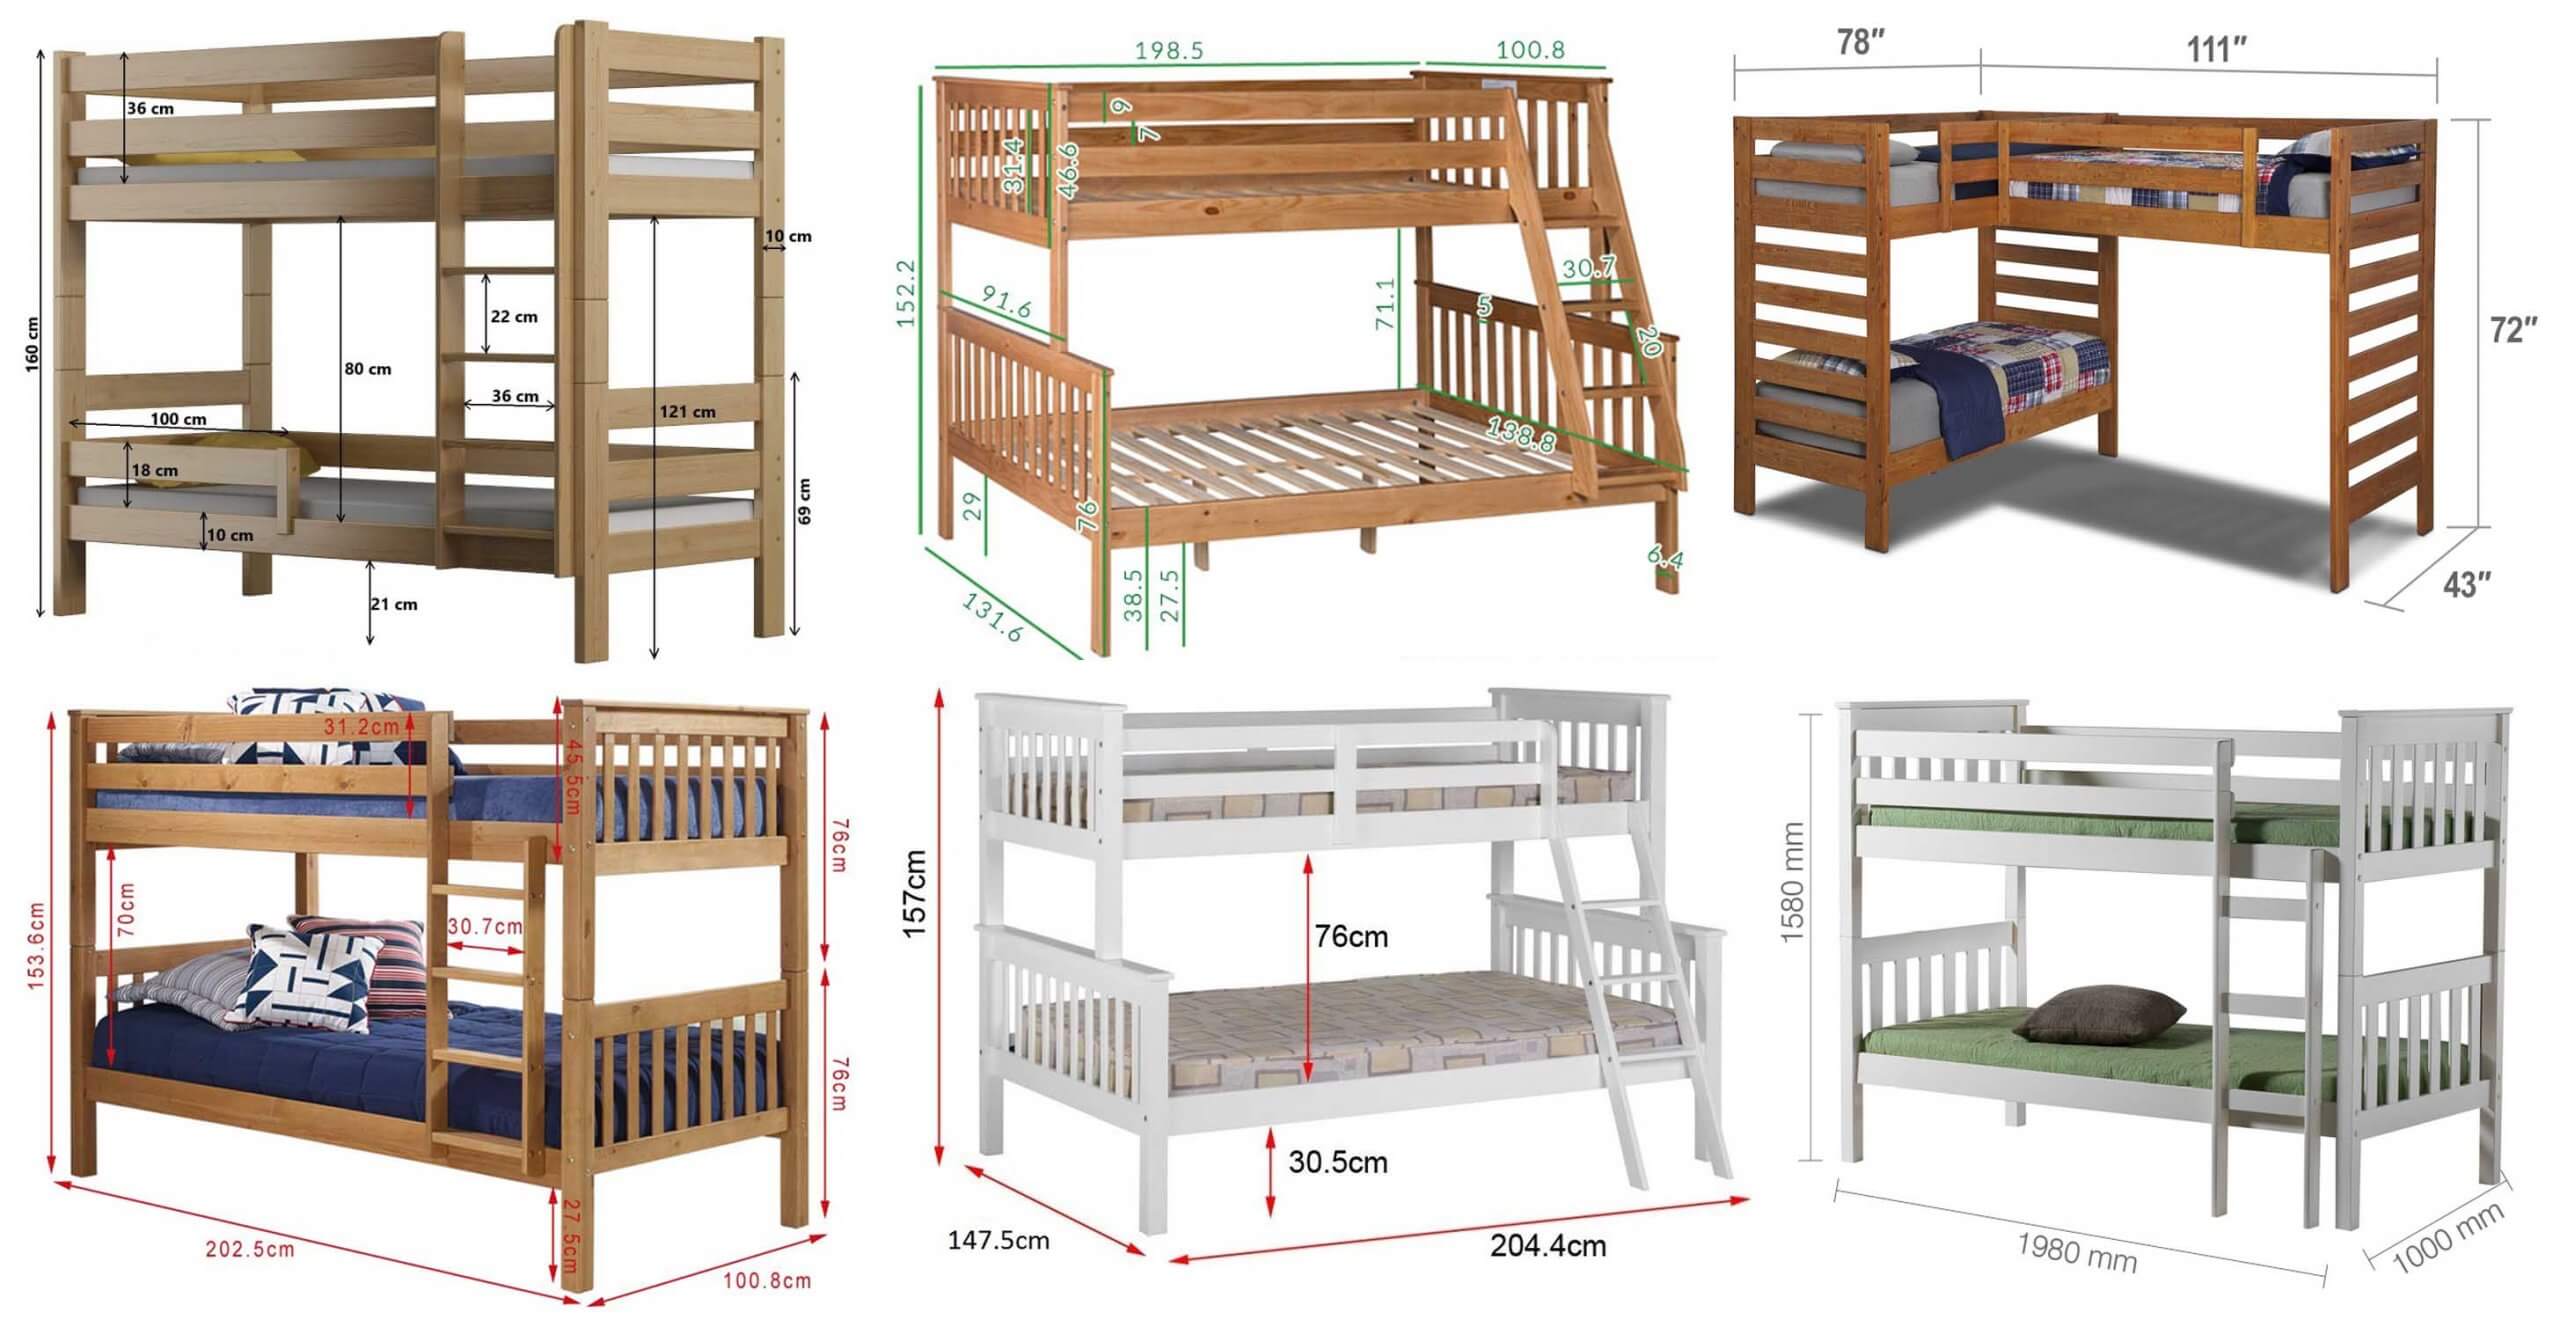 dimensions of bunk bed mattresses